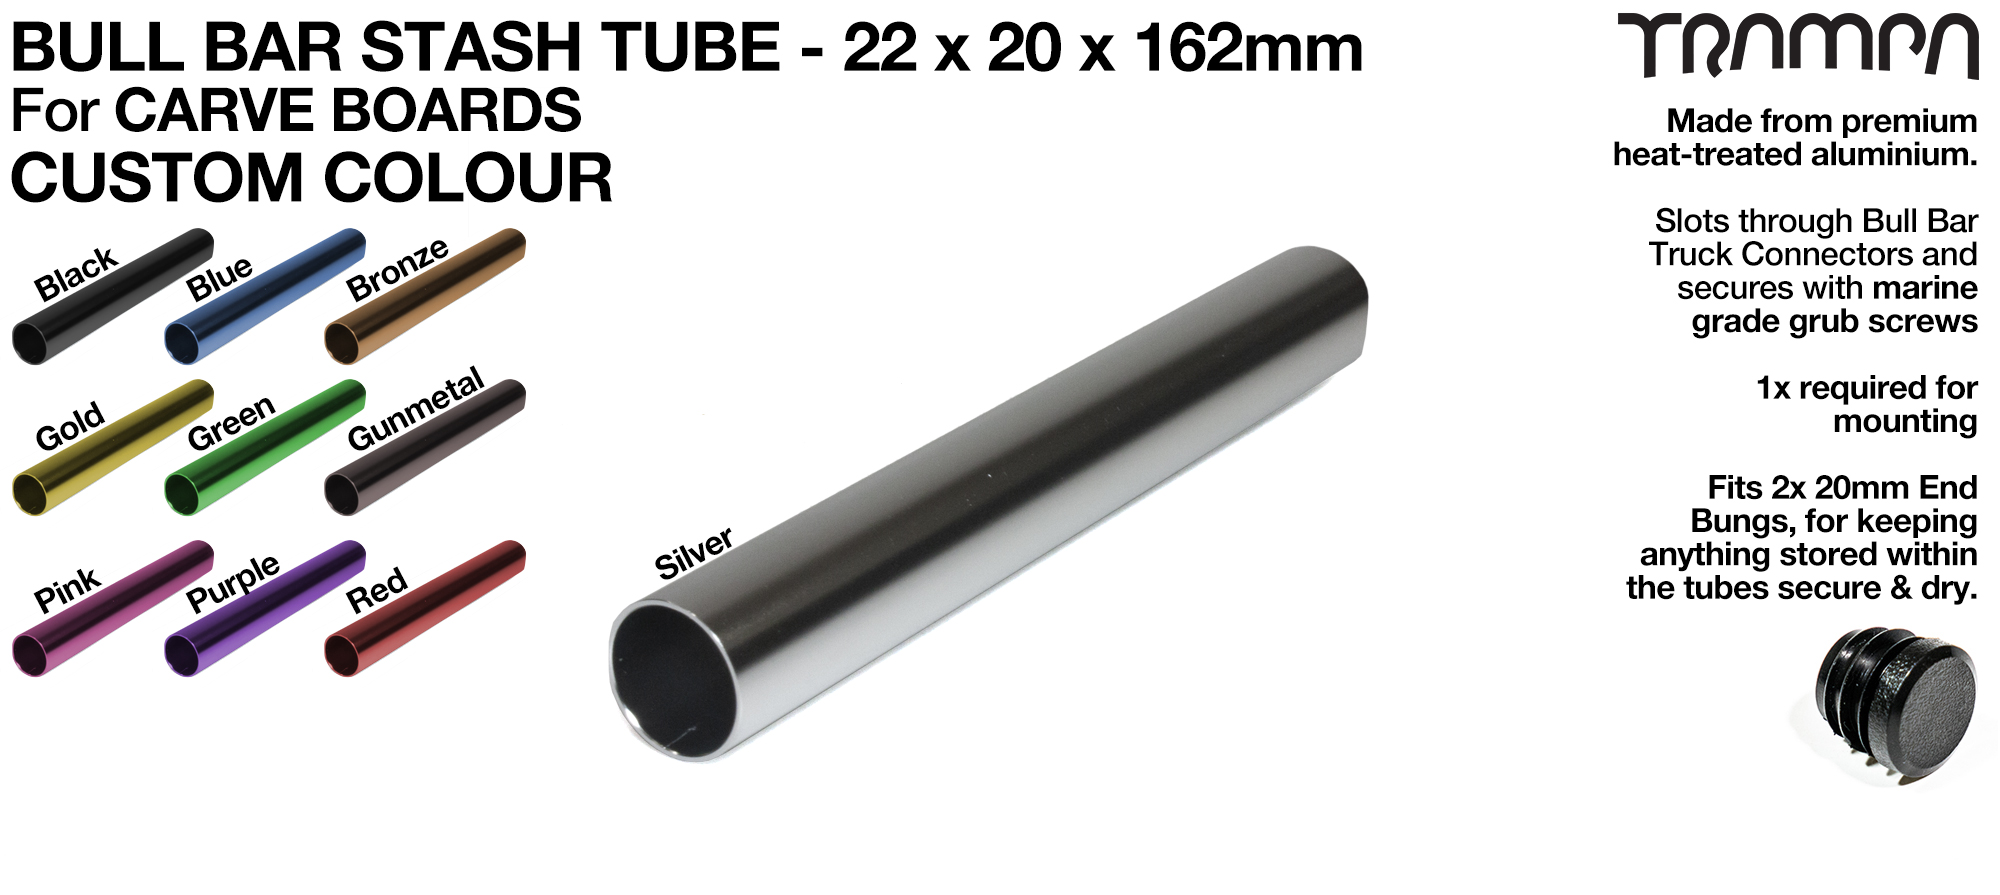 Carve Board Bull Bar Hollow Aluminium Stash Tube - CUSTOM 22 x 20 x 162 mm 